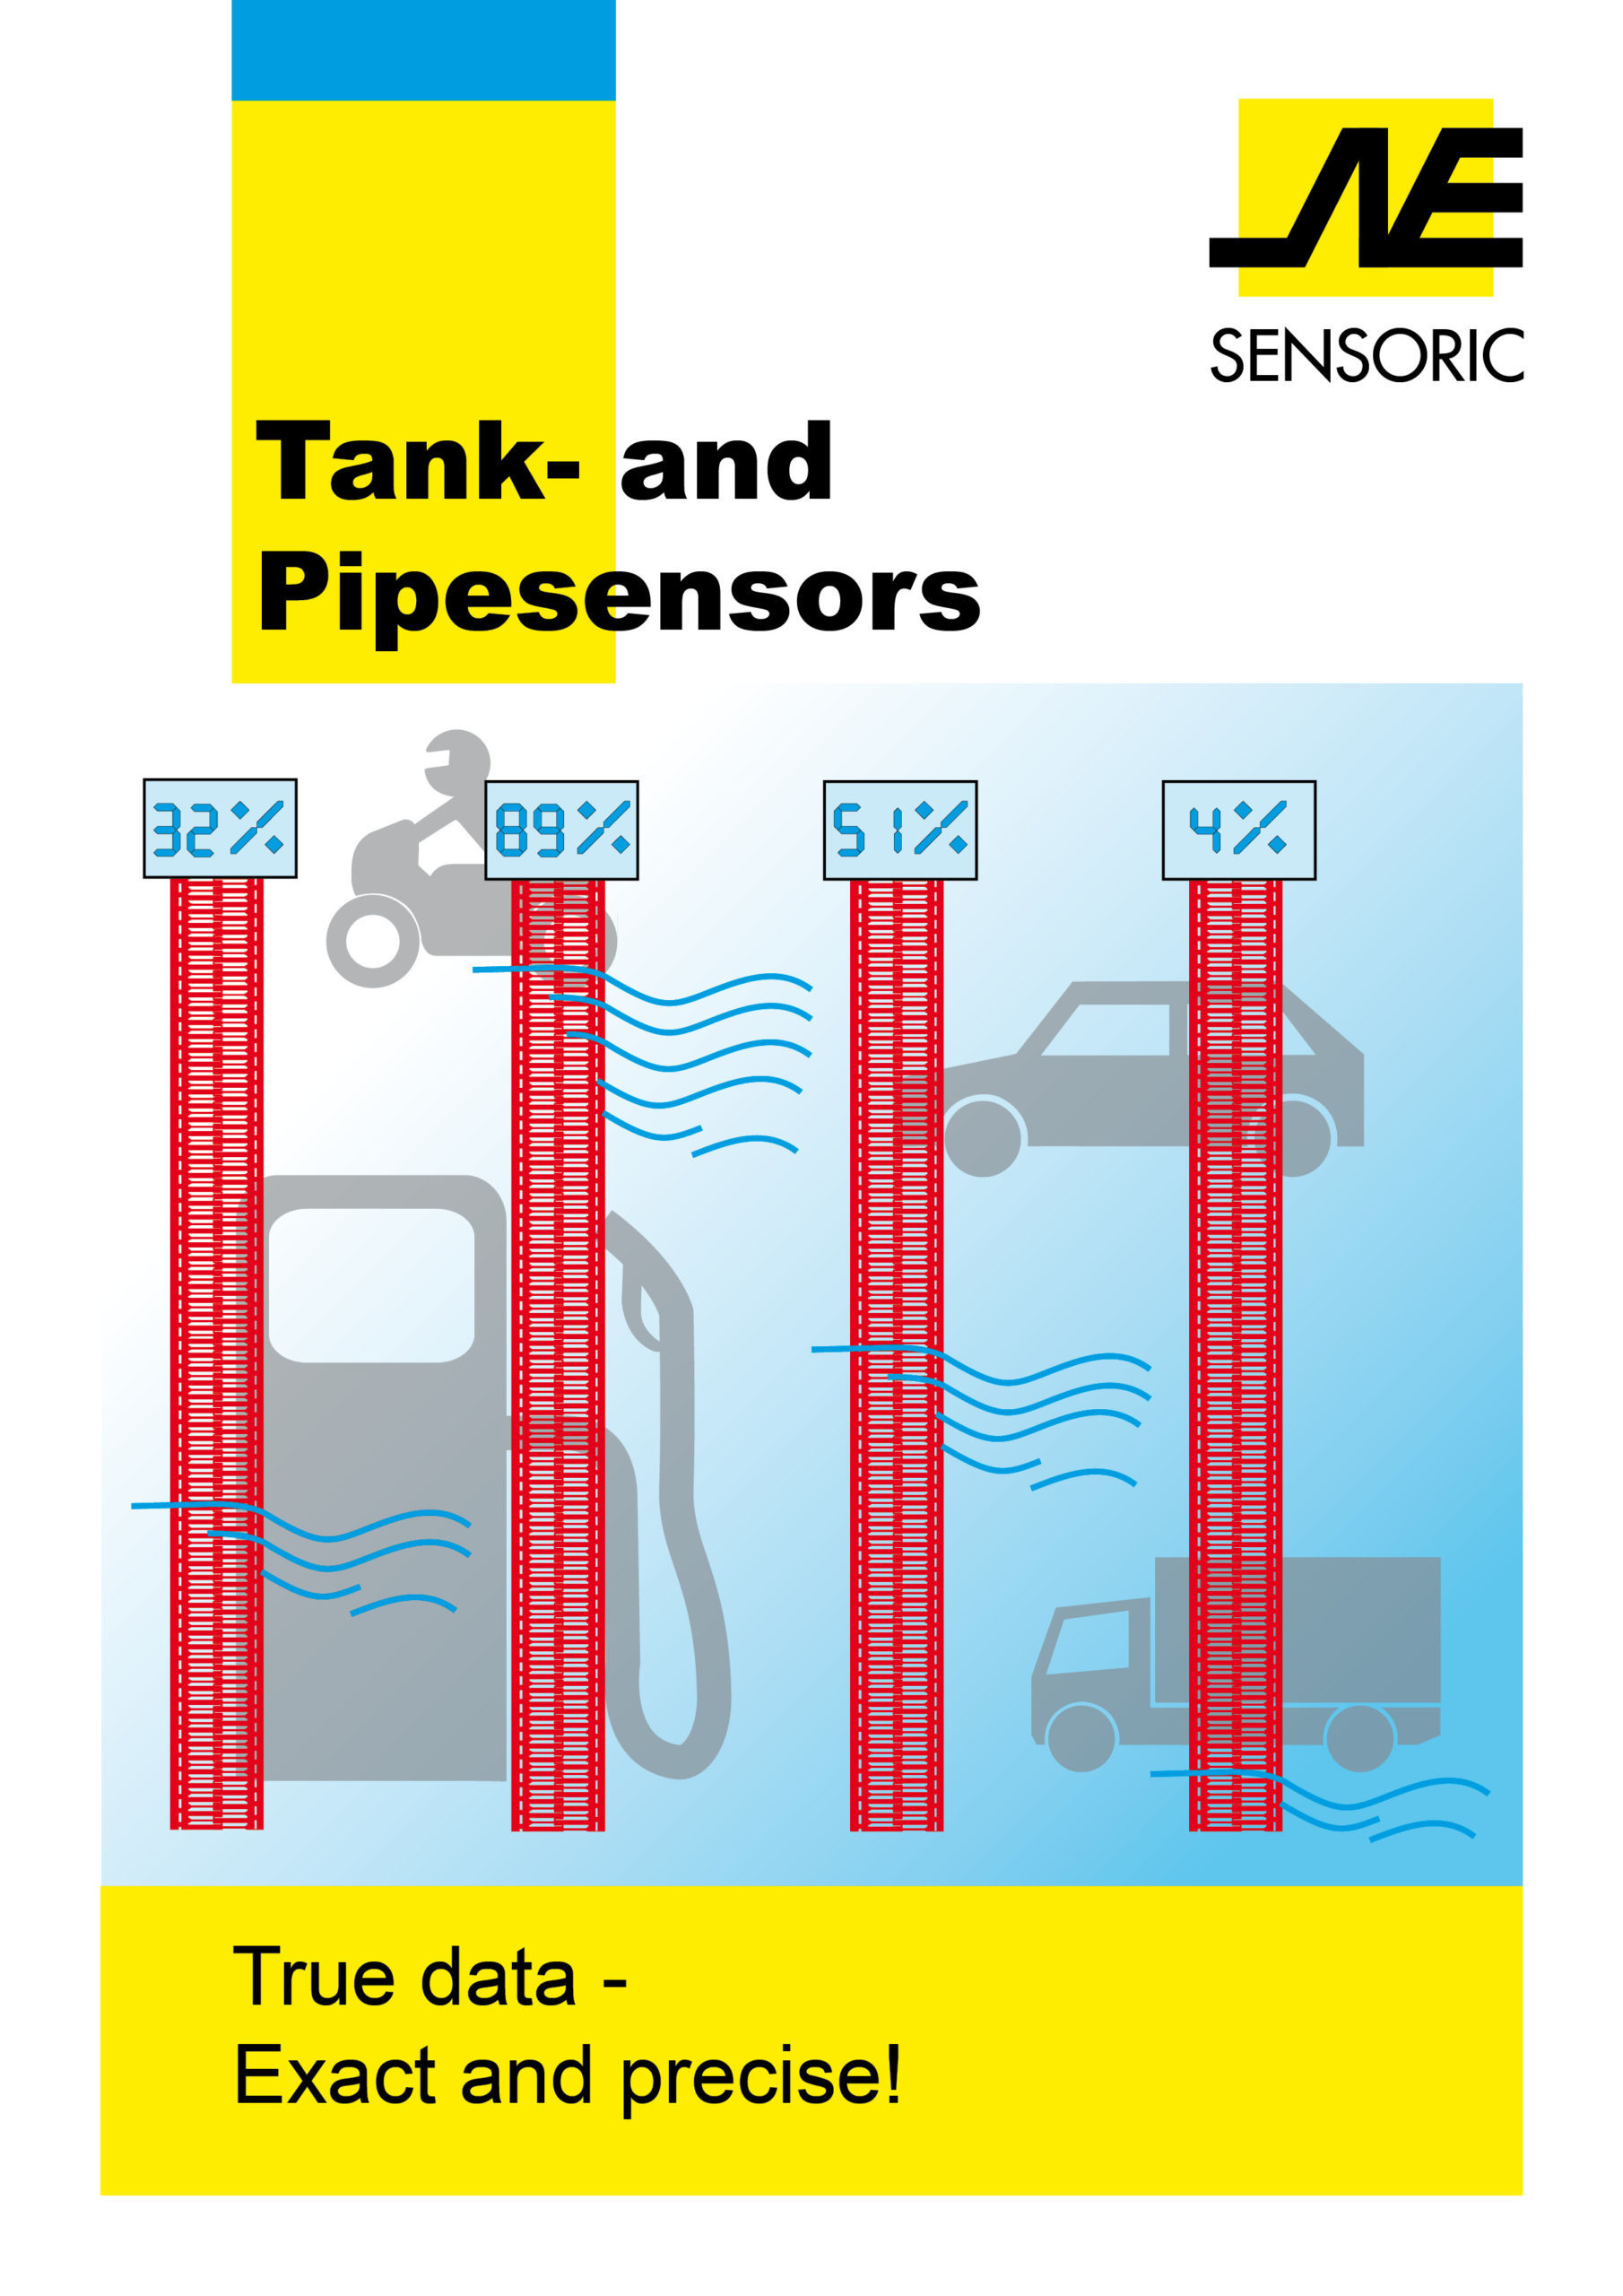 Tanksensors